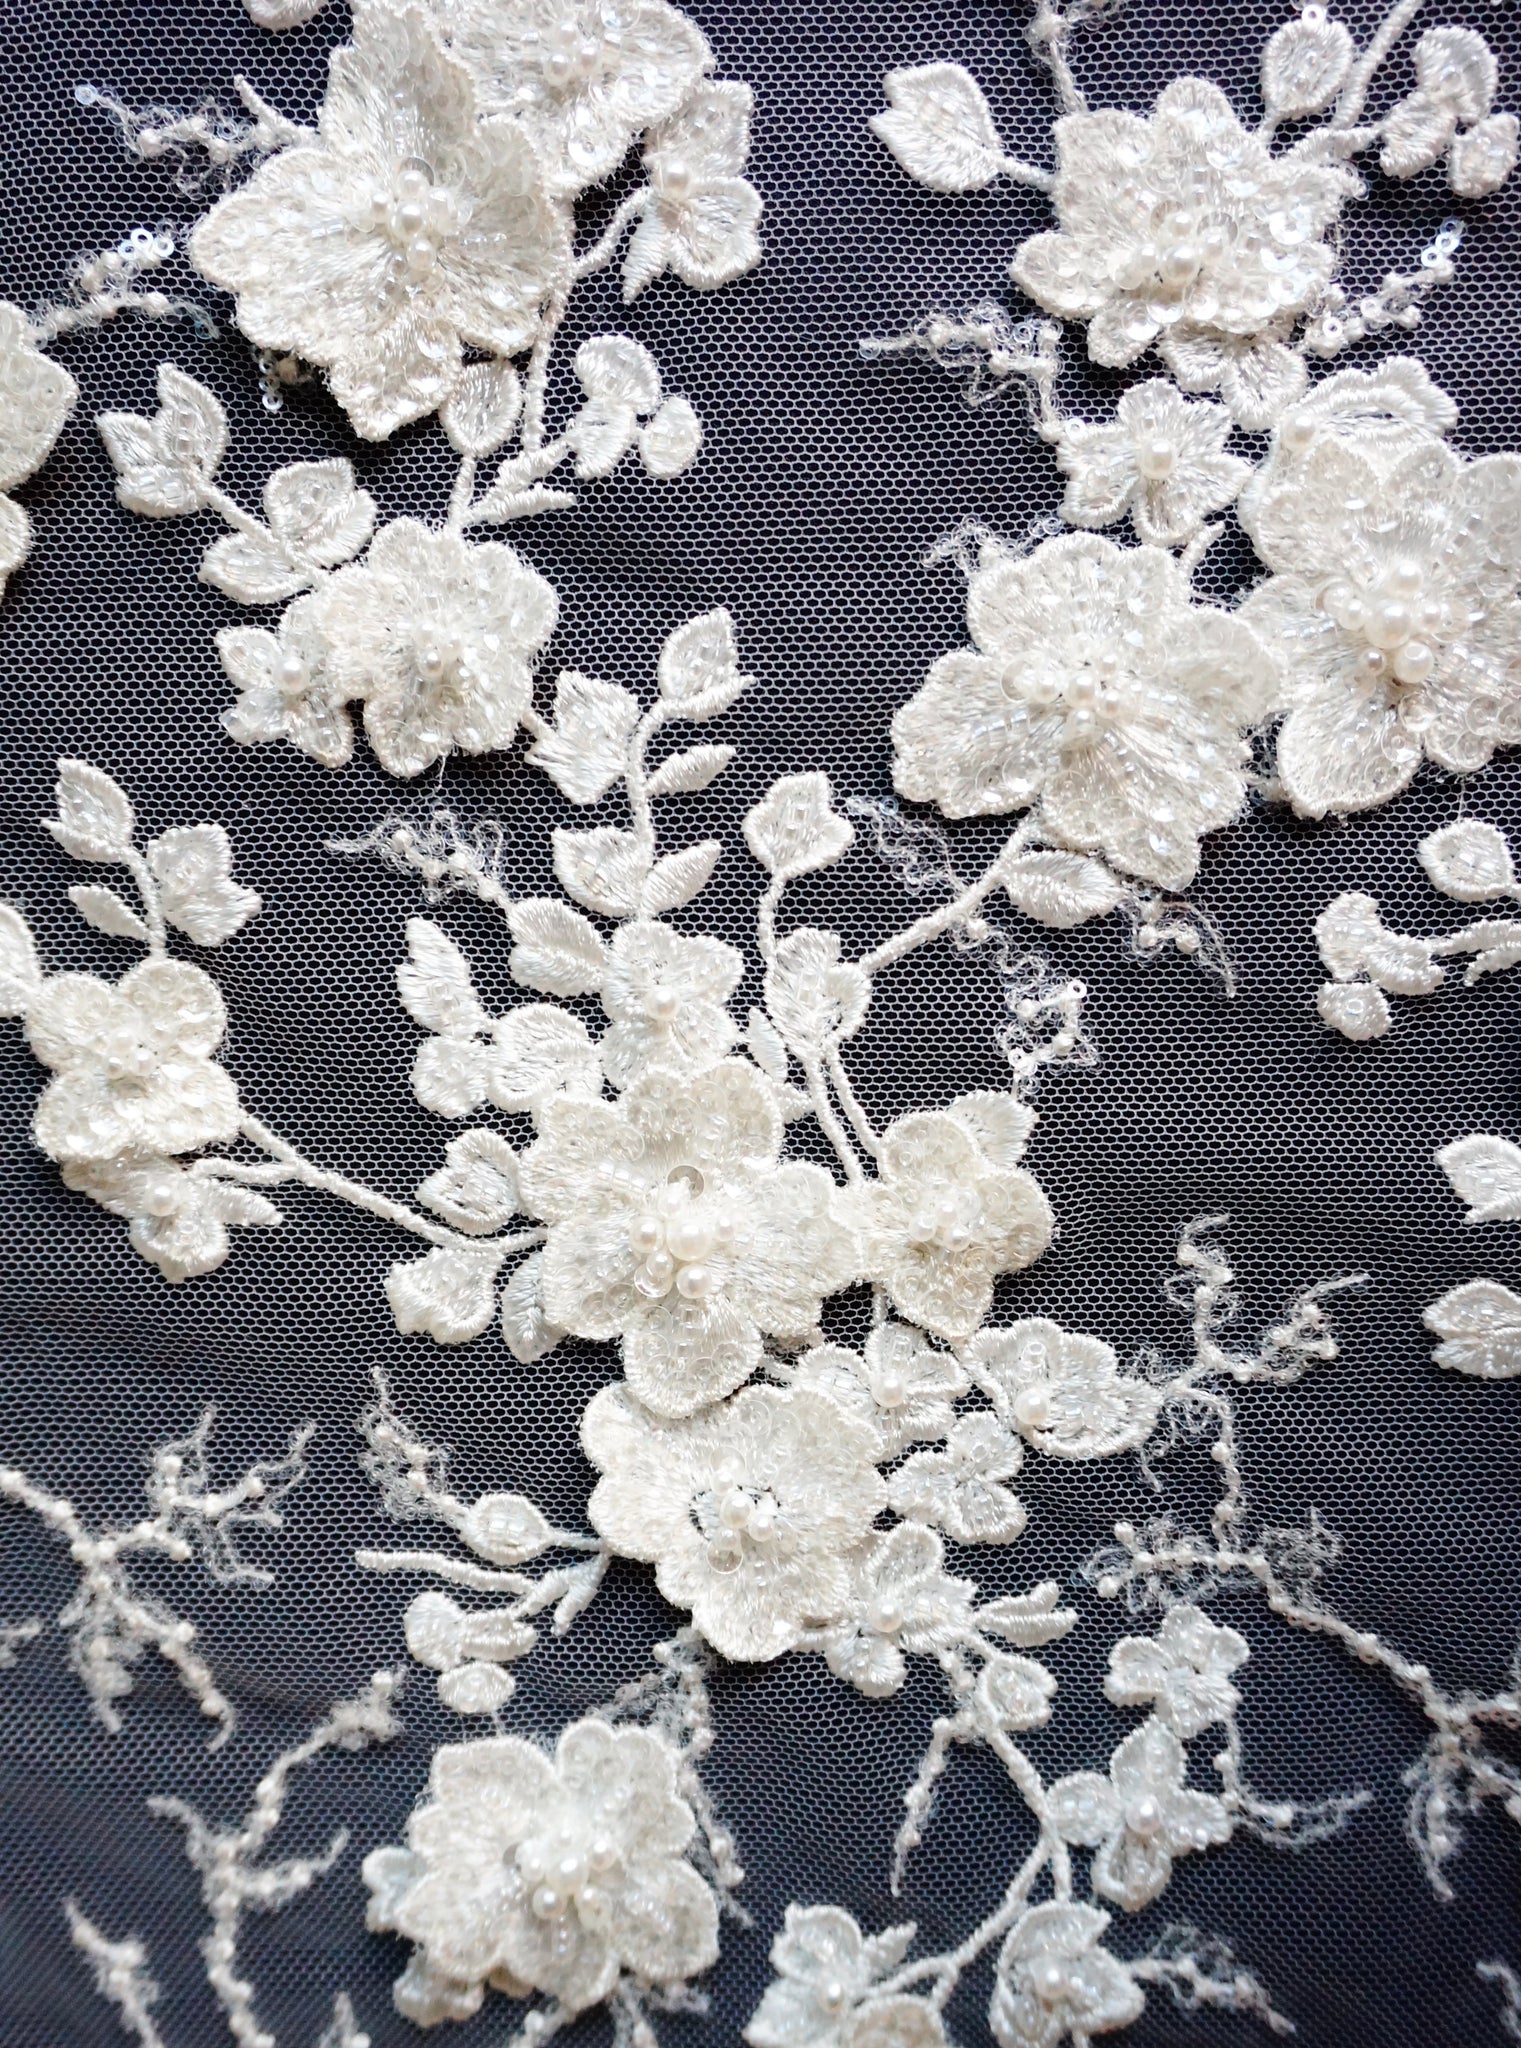 Wedding Dress Lace Handmade Fashion Embroidery